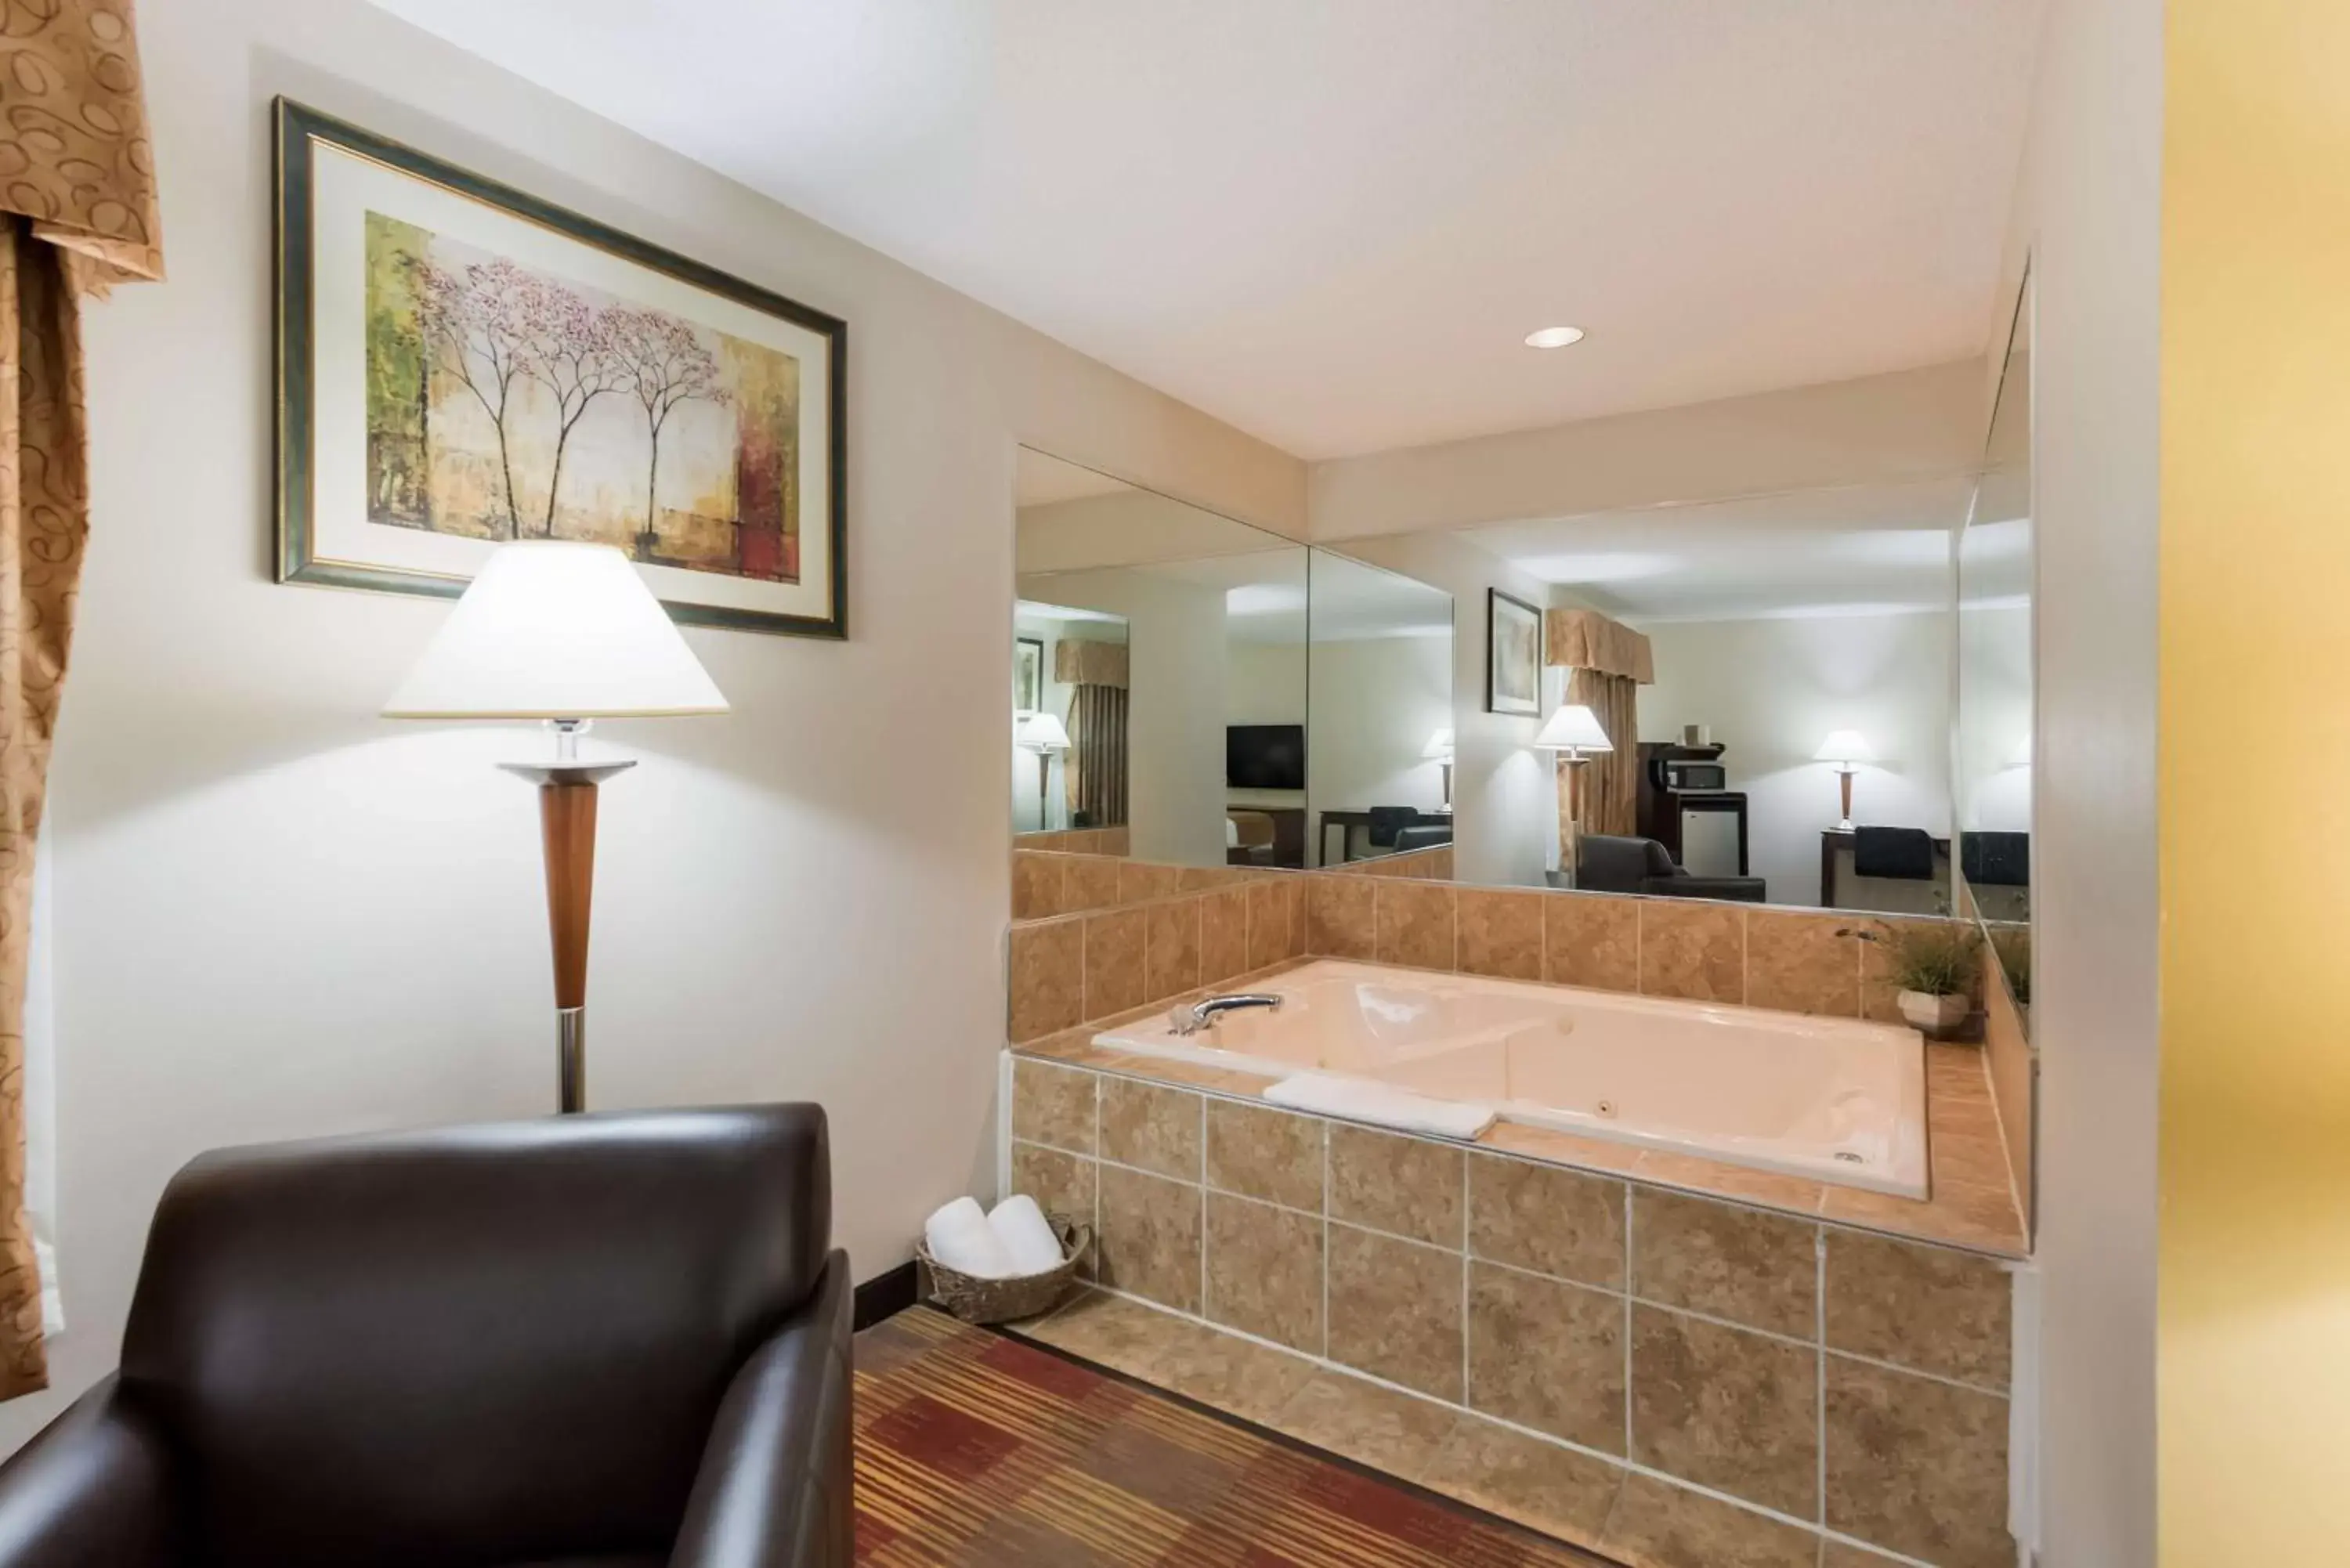 Photo of the whole room, Bathroom in Best Western Lakewood Inn